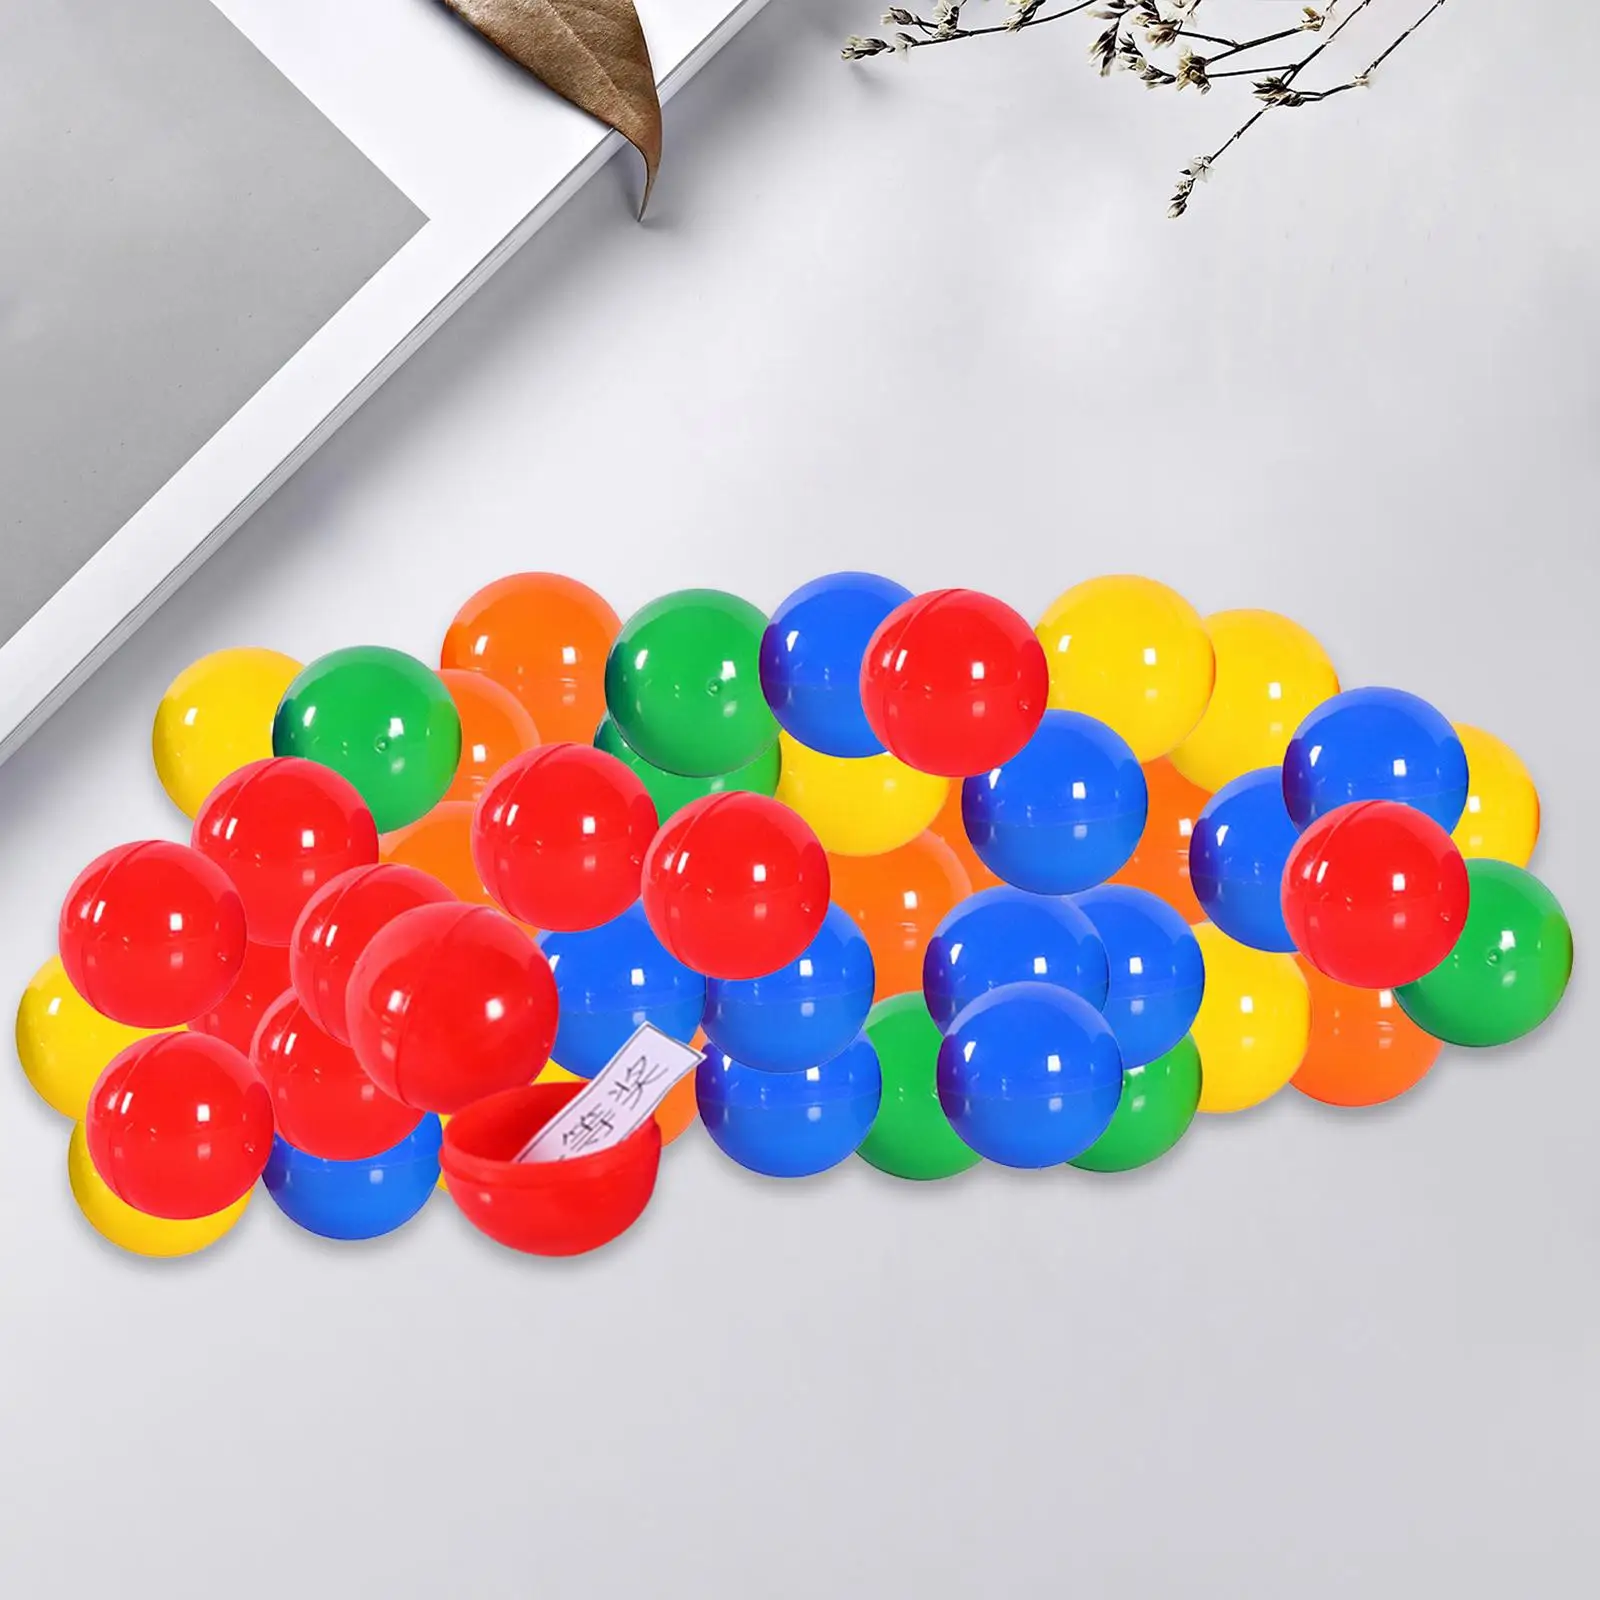 50 Pieces Bingo Ball Raffle Balls Durable Devices Direct Replaces Tally Ball